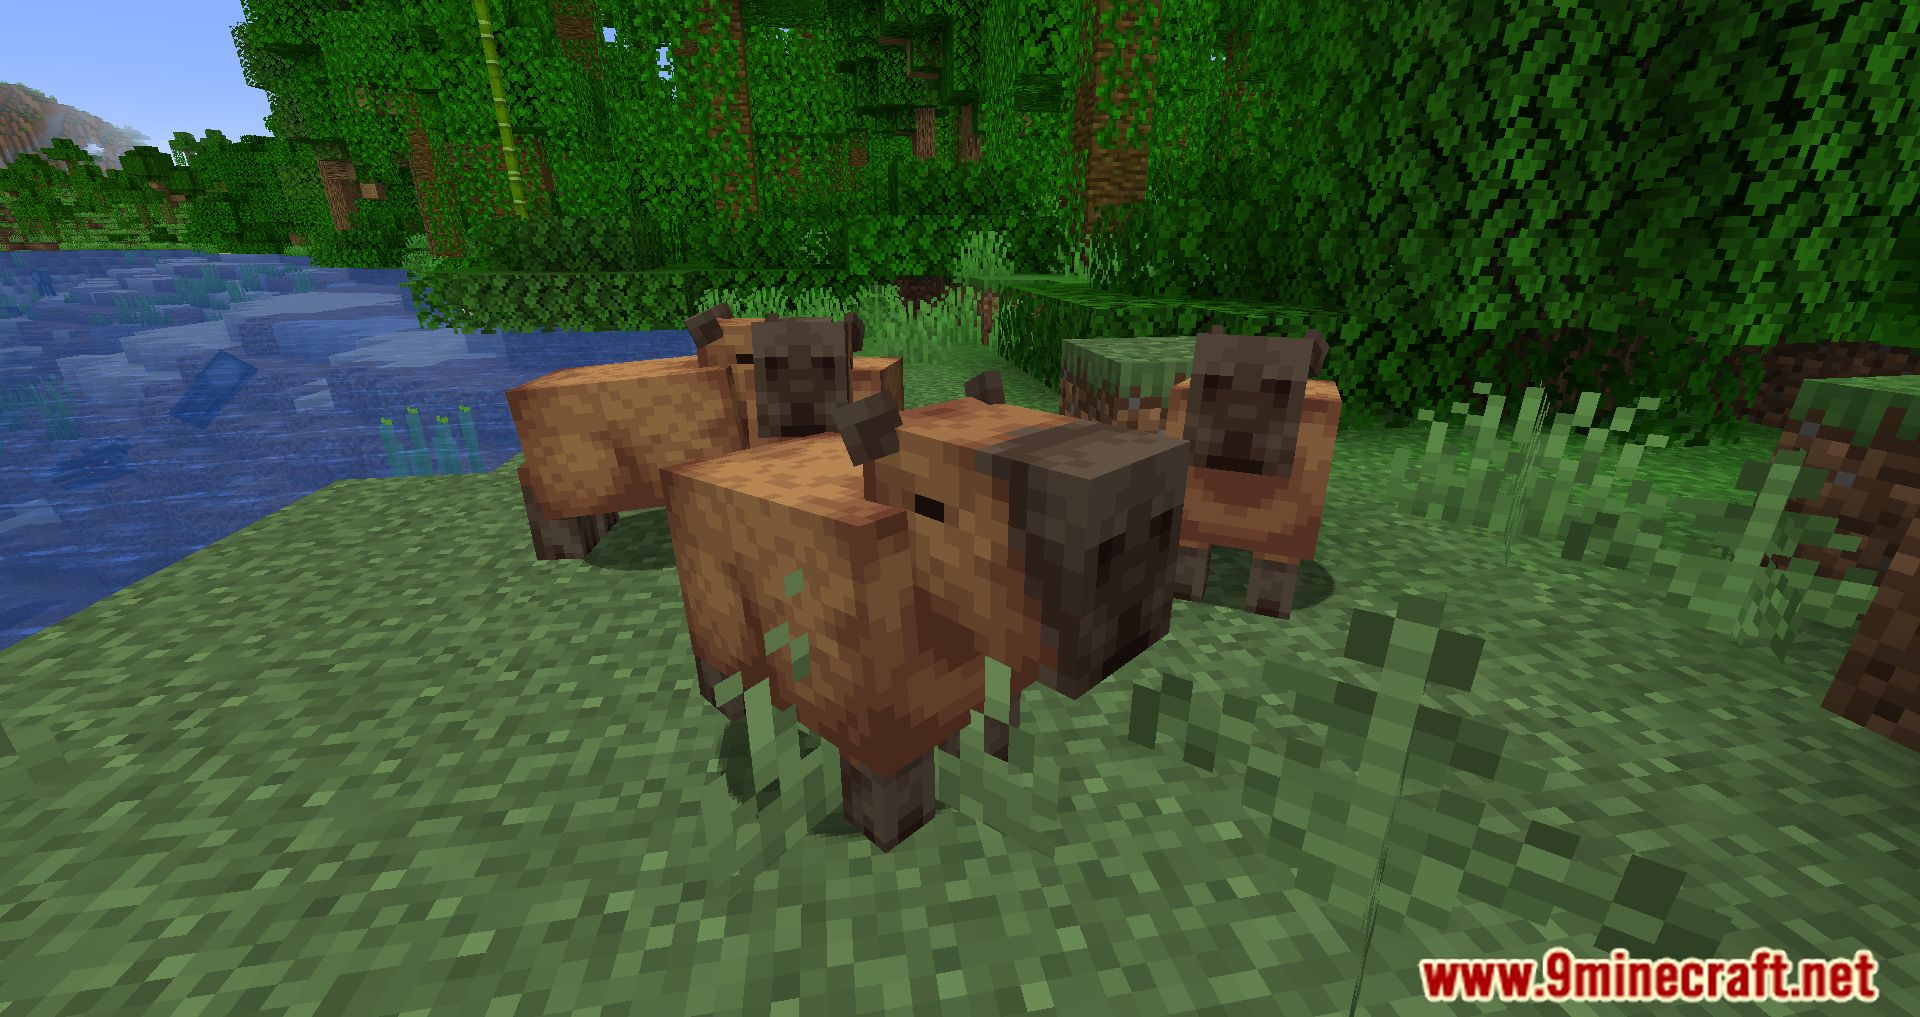 Capybara for Minecraft 1.19